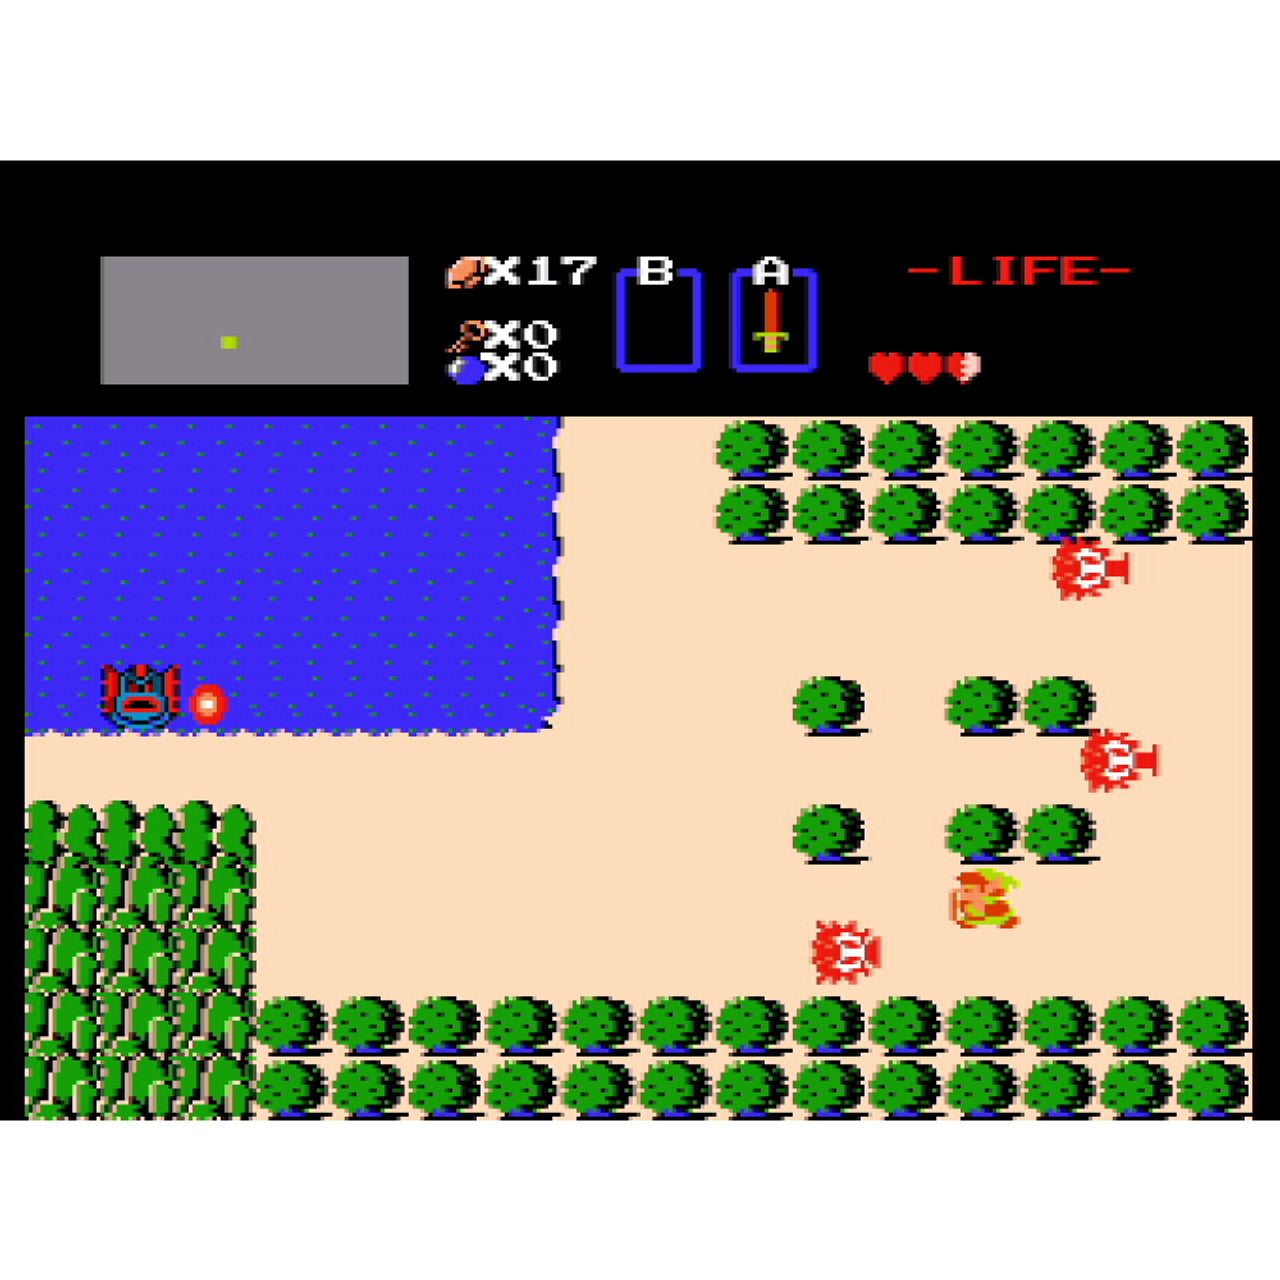 Nintendo - Game & Watch System: The Legend of Zelda